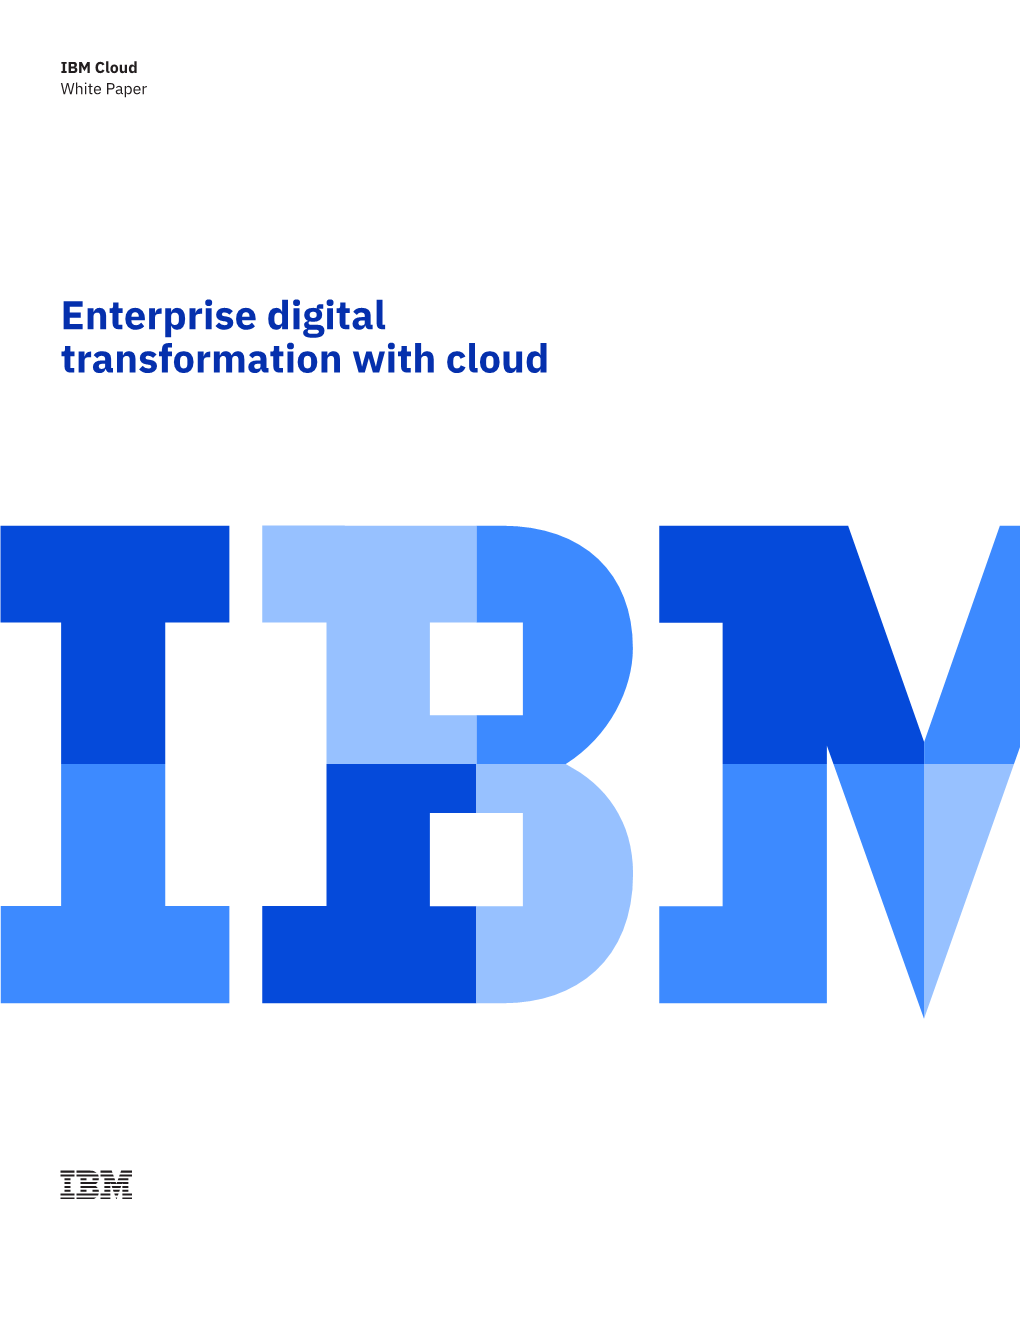 Enterprise Digital Transformation with Cloud 2 Enterprise Digital Transformation with Cloud